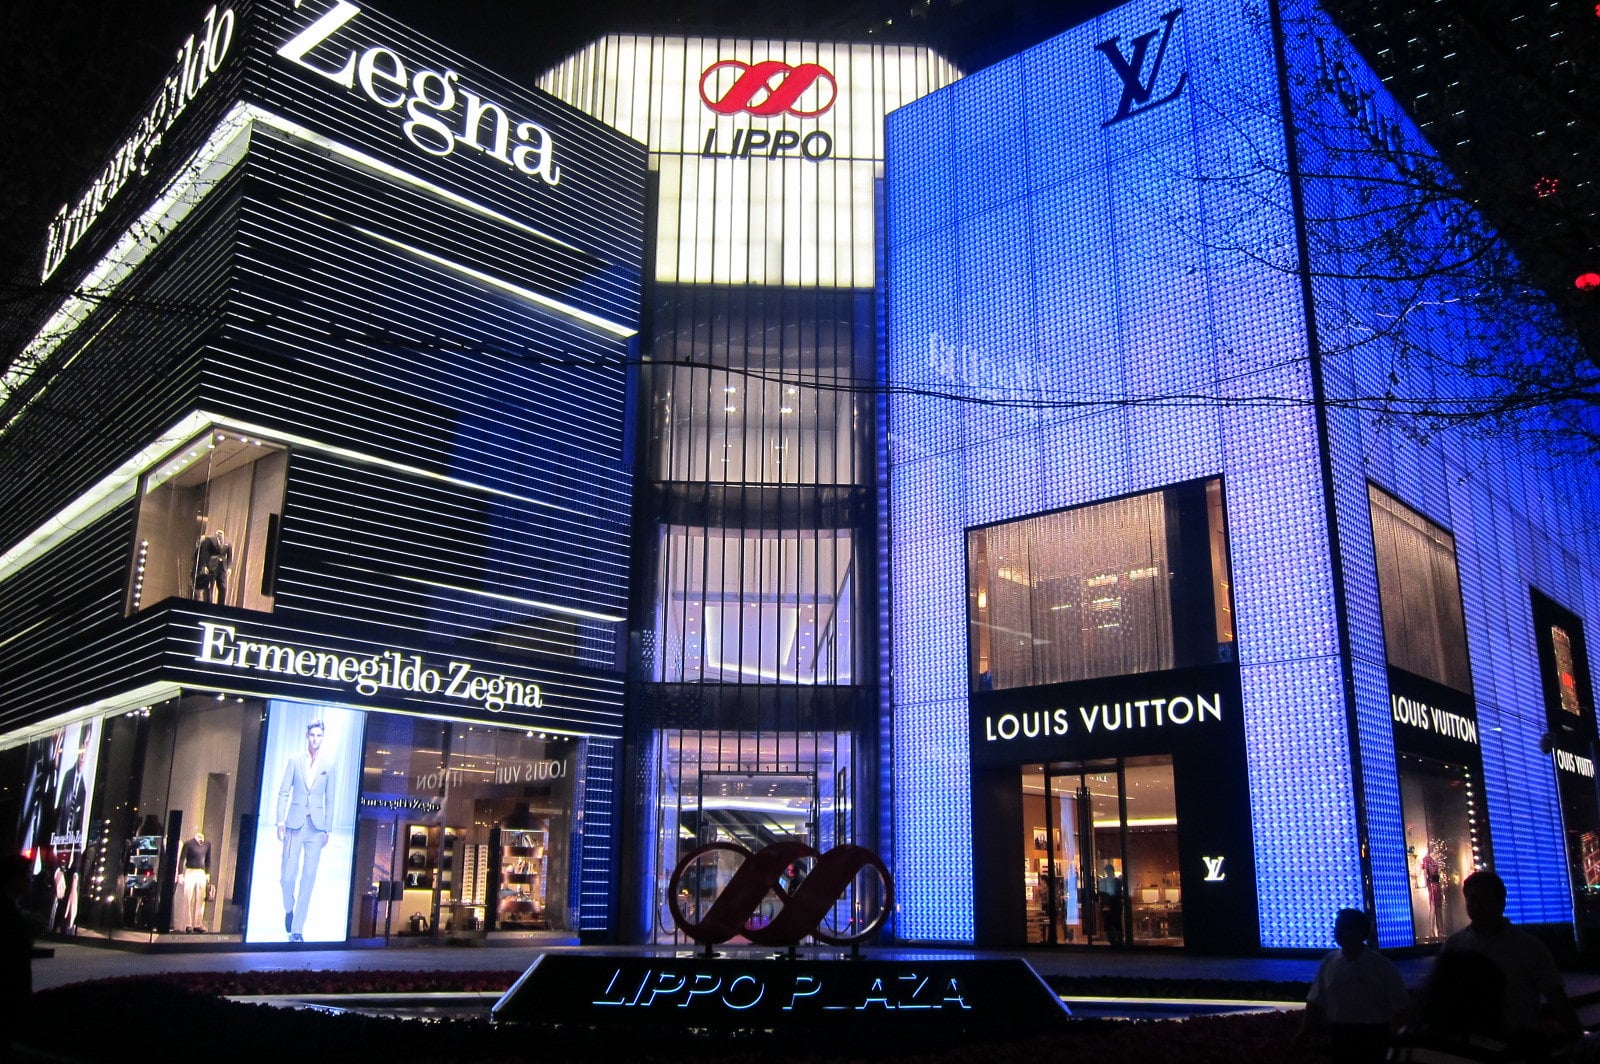 Louis Vuitton Shanghai Pudong Store in Shanghai, China